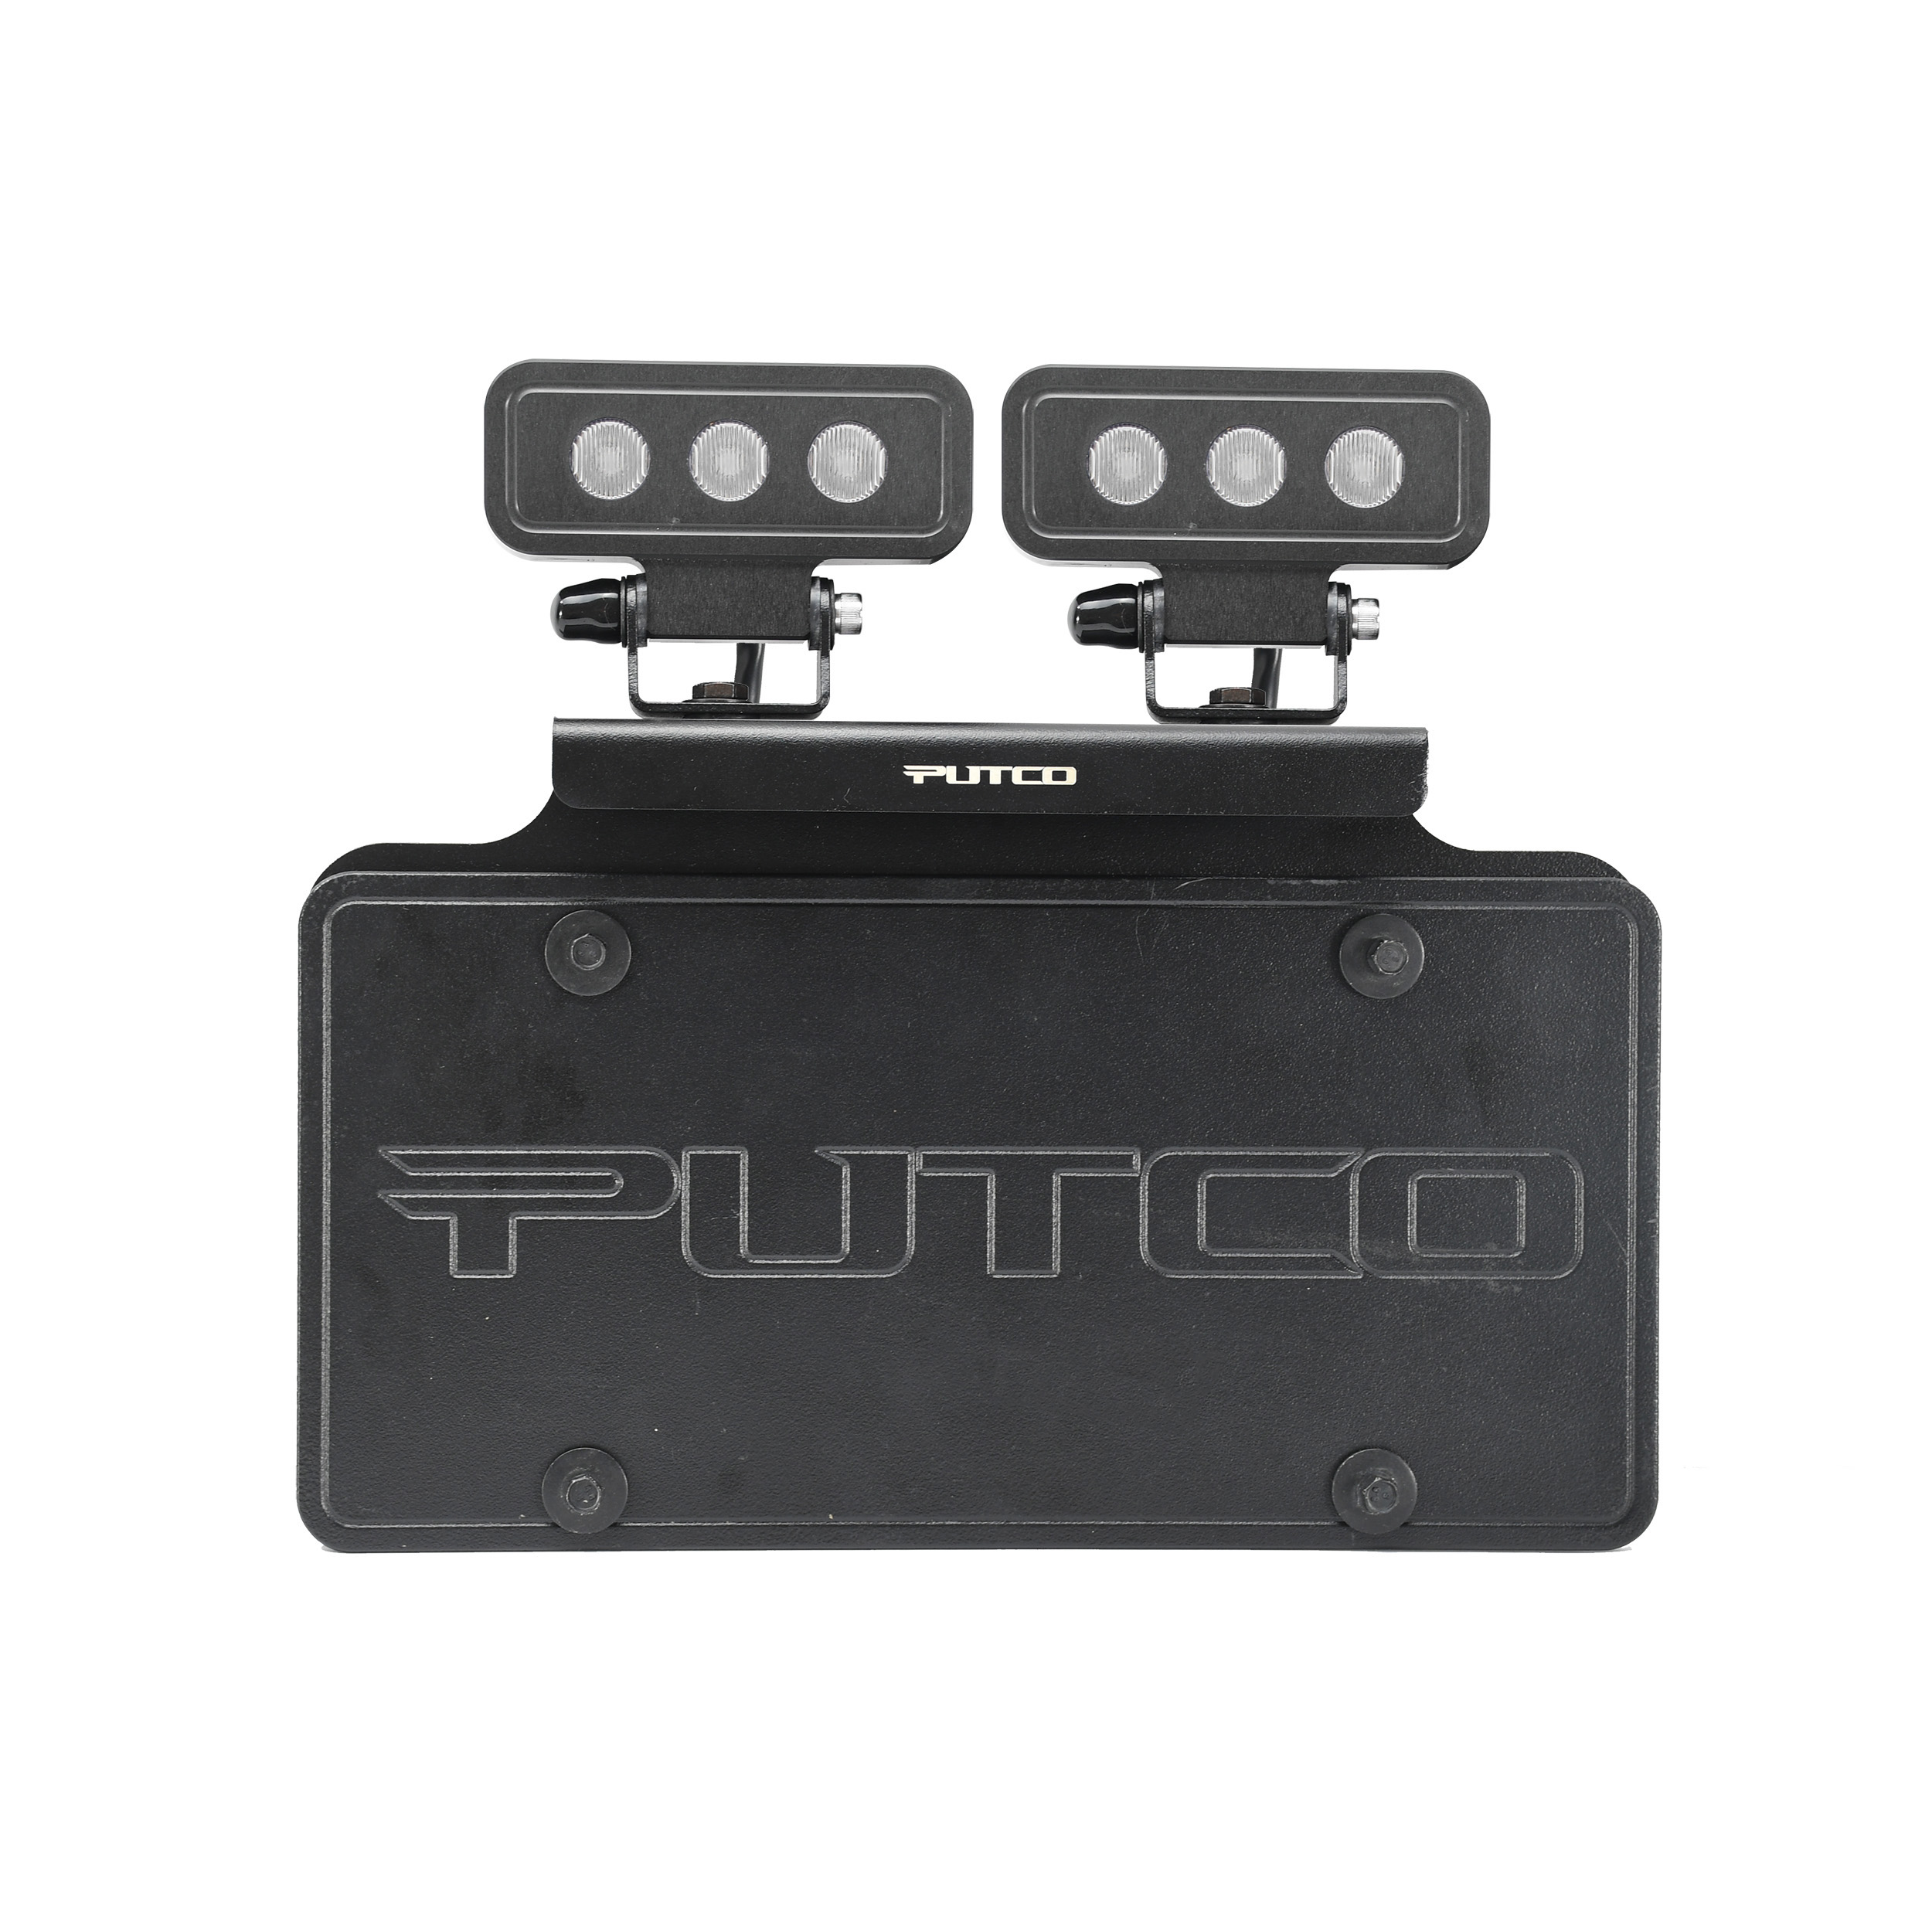 Putco Luminix Jeep Wrangler Roof Mounted LED Light Bar Kit